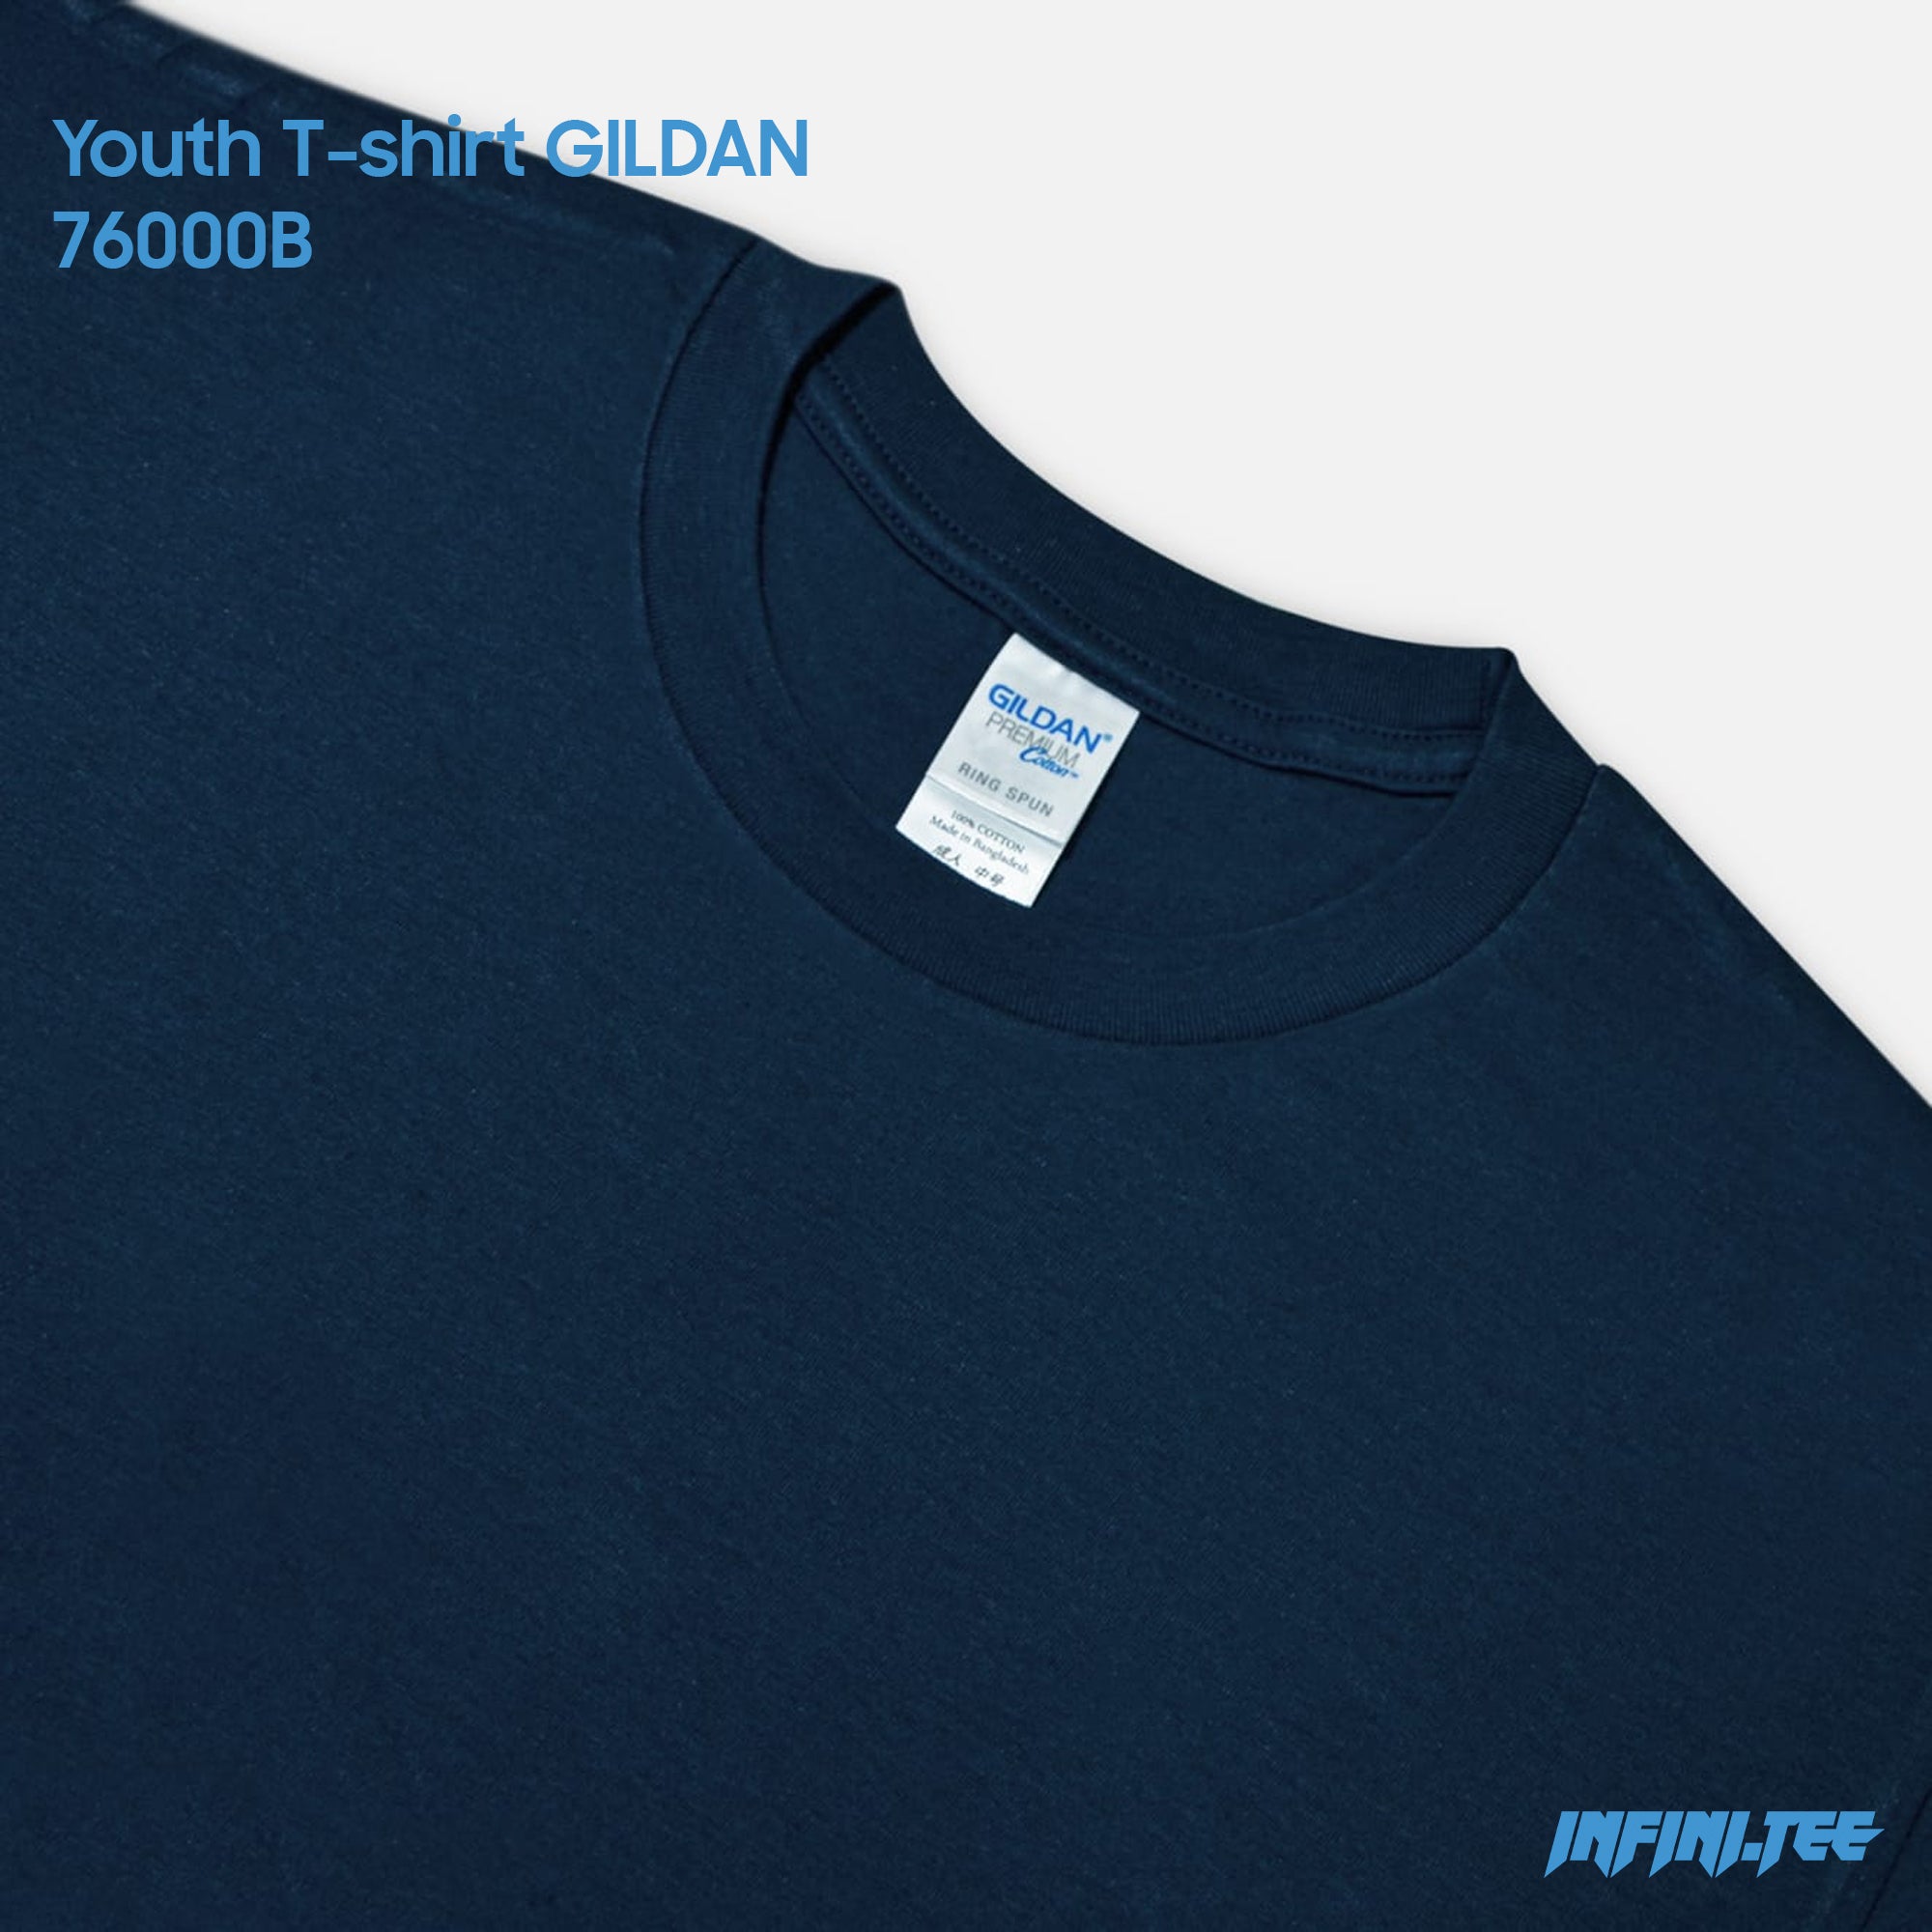 Youth T-shirt 76000B GILDAN - NAVY